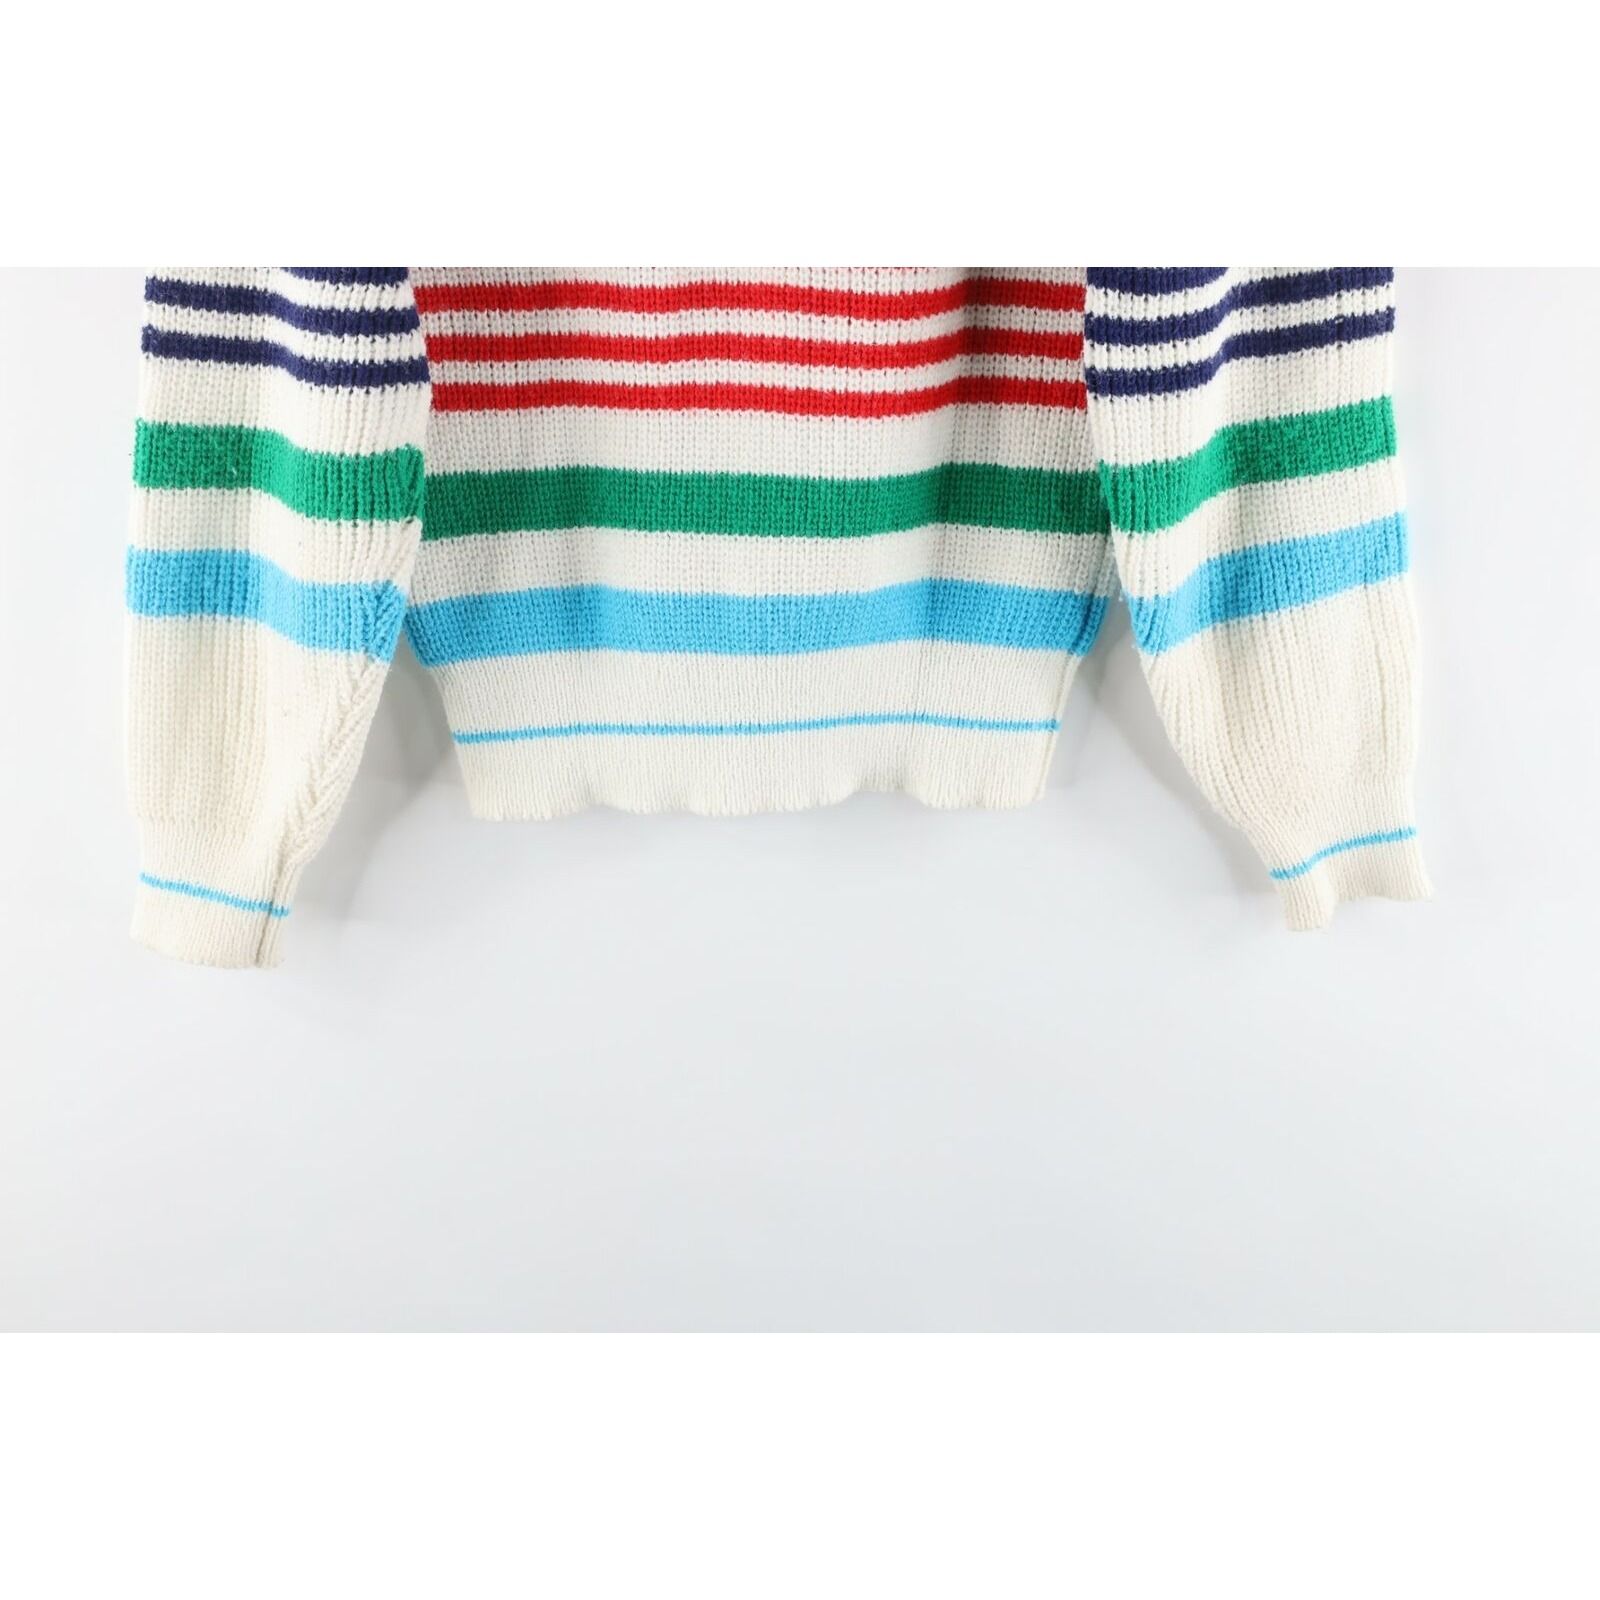 Vintage Vintage 70s Rockabilly Medium Rainbow Striped Knit Sweater Size M / US 6-8 / IT 42-44 - 7 Preview